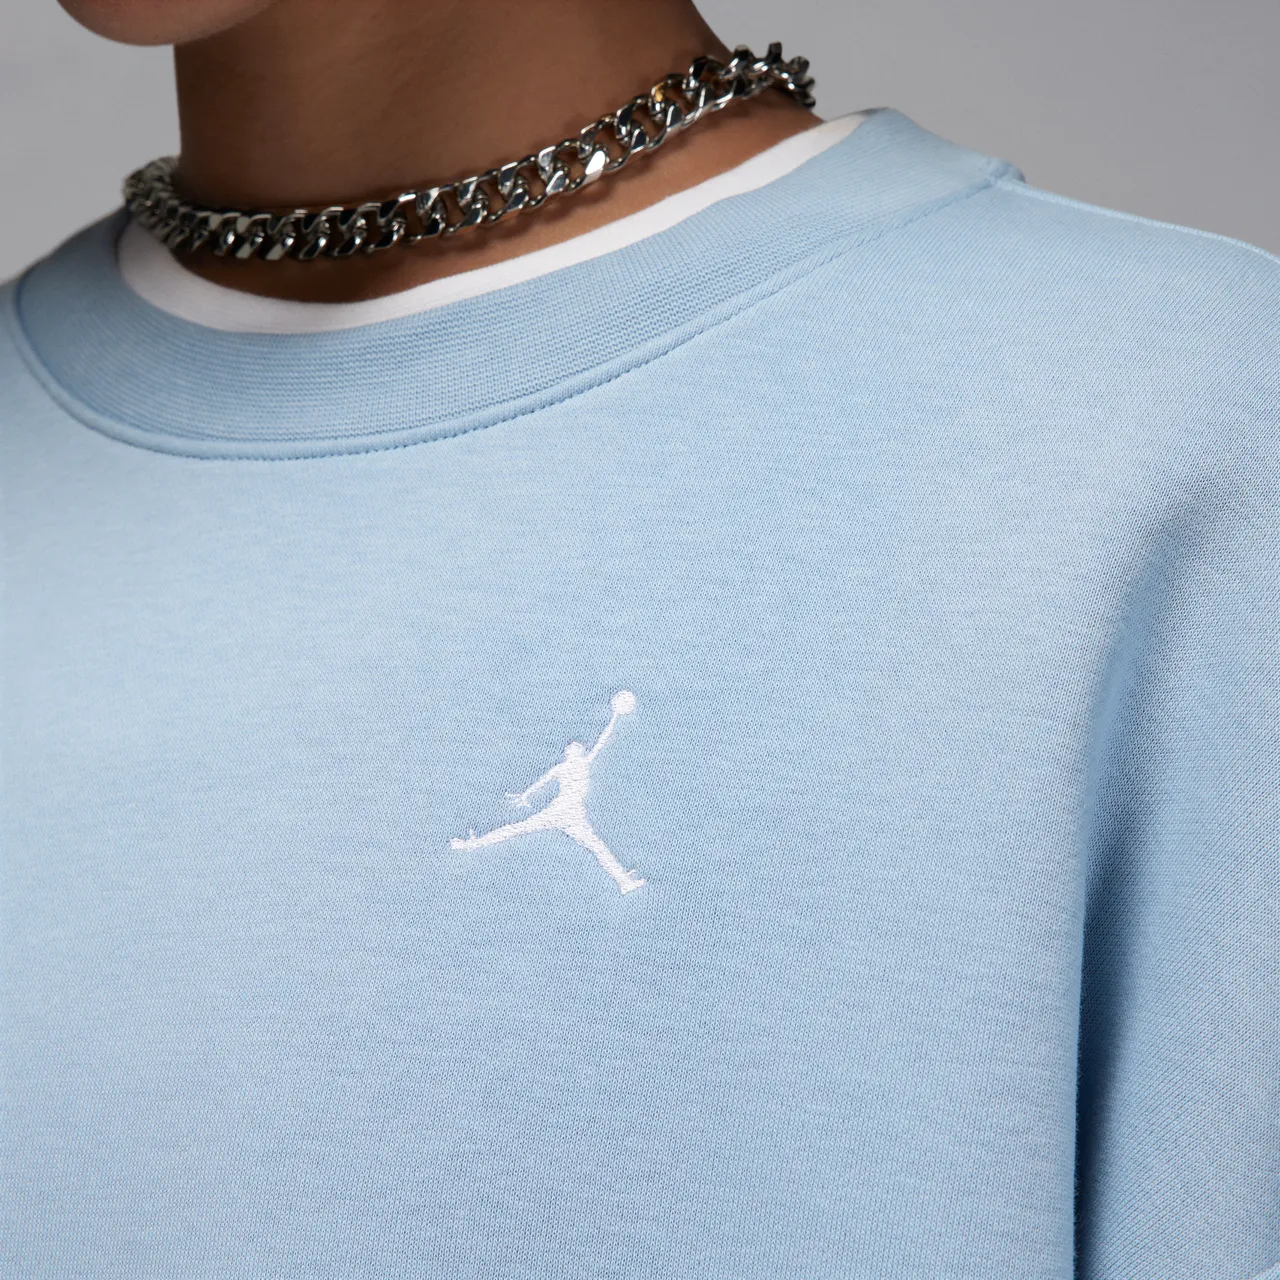 Jordan Brooklyn Fleece Women's Crew-Neck Sweatshirt - Blue - Polyester